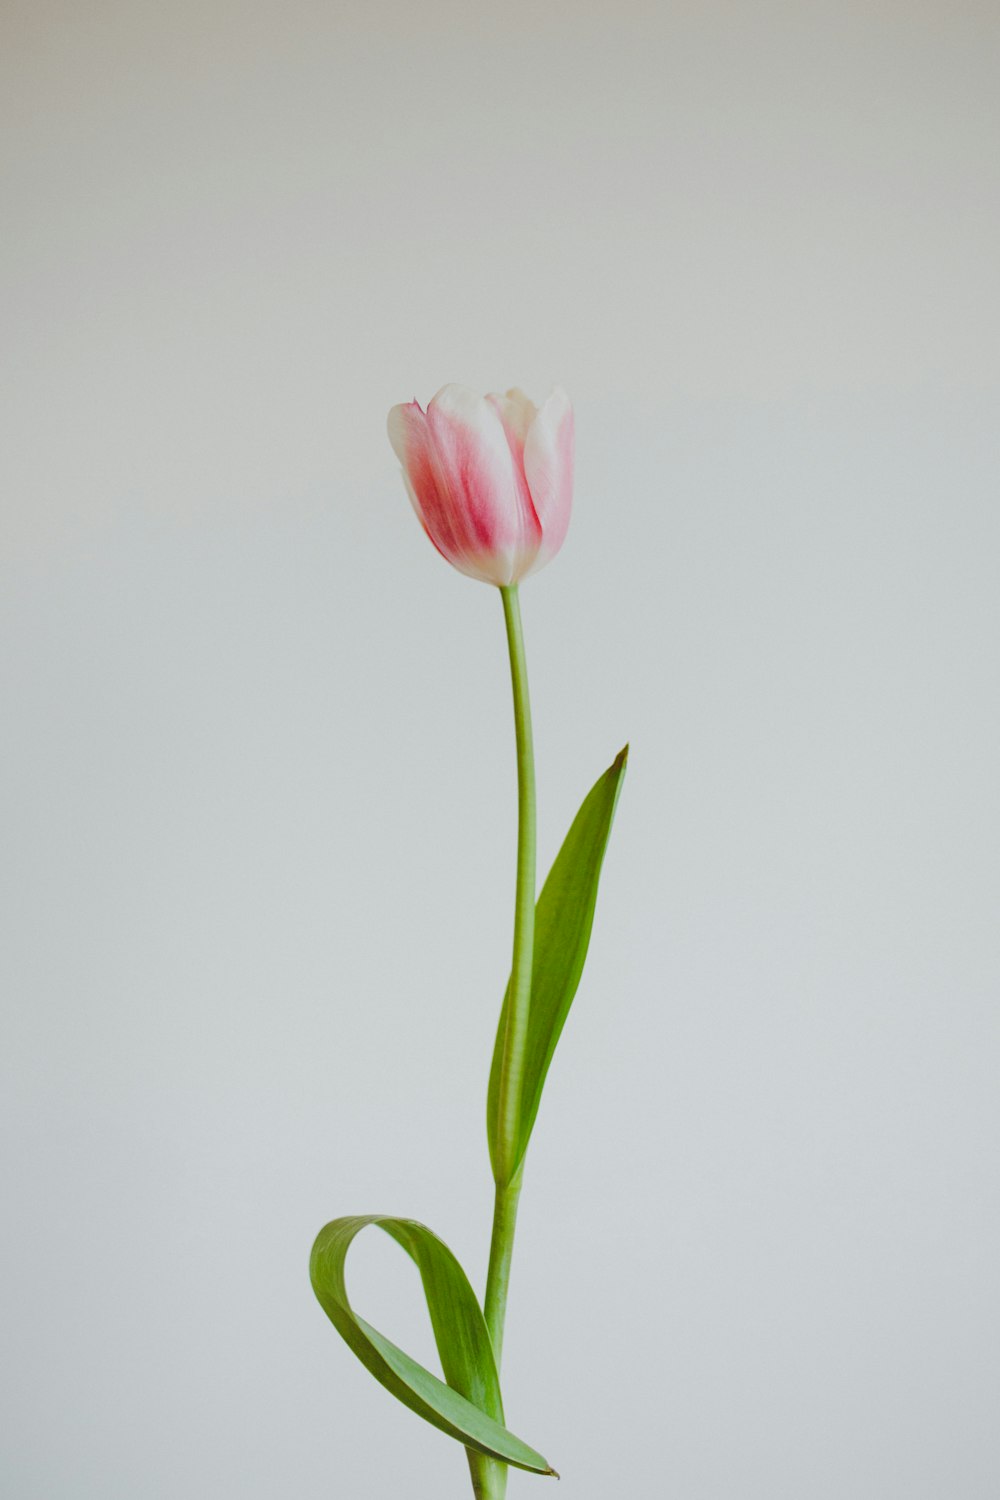 tulipán rosa en flor foto de primer plano